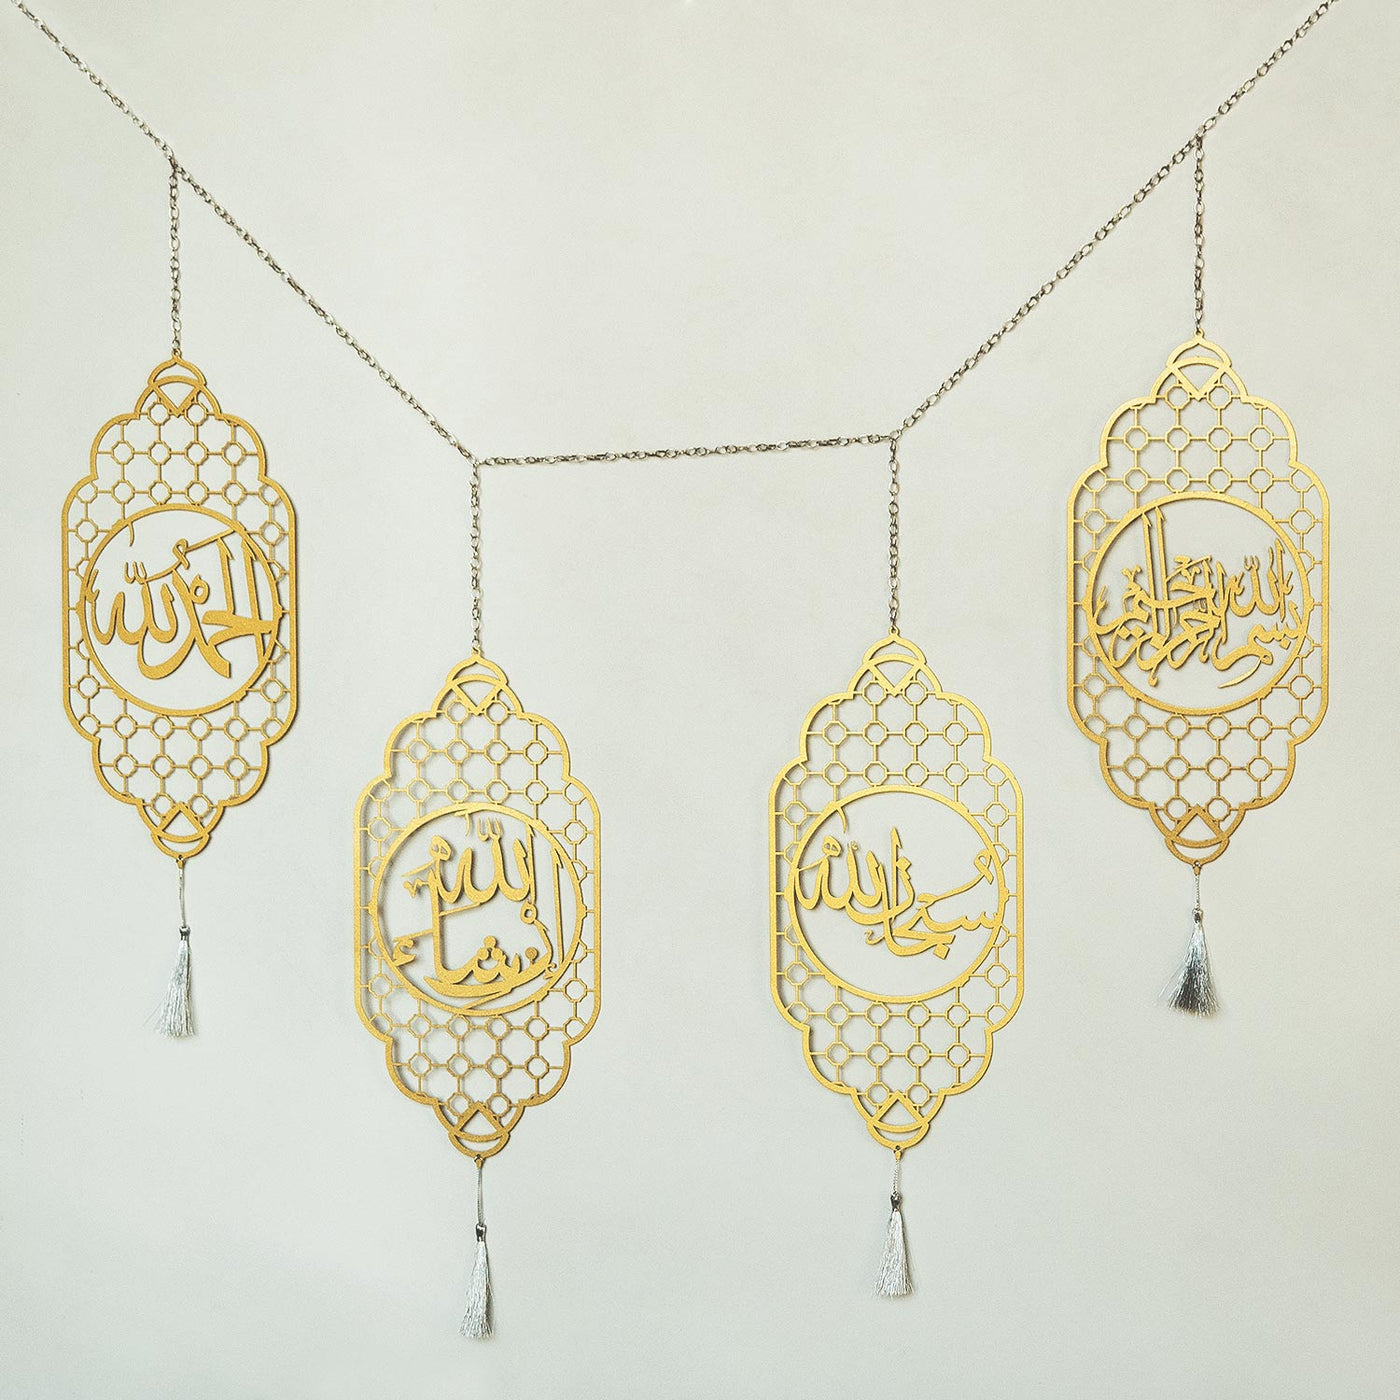 Inshallah, Bismillah, Subhanallah and Alhamdulillah Set of 4 Metal Wall Hanging - WAM164